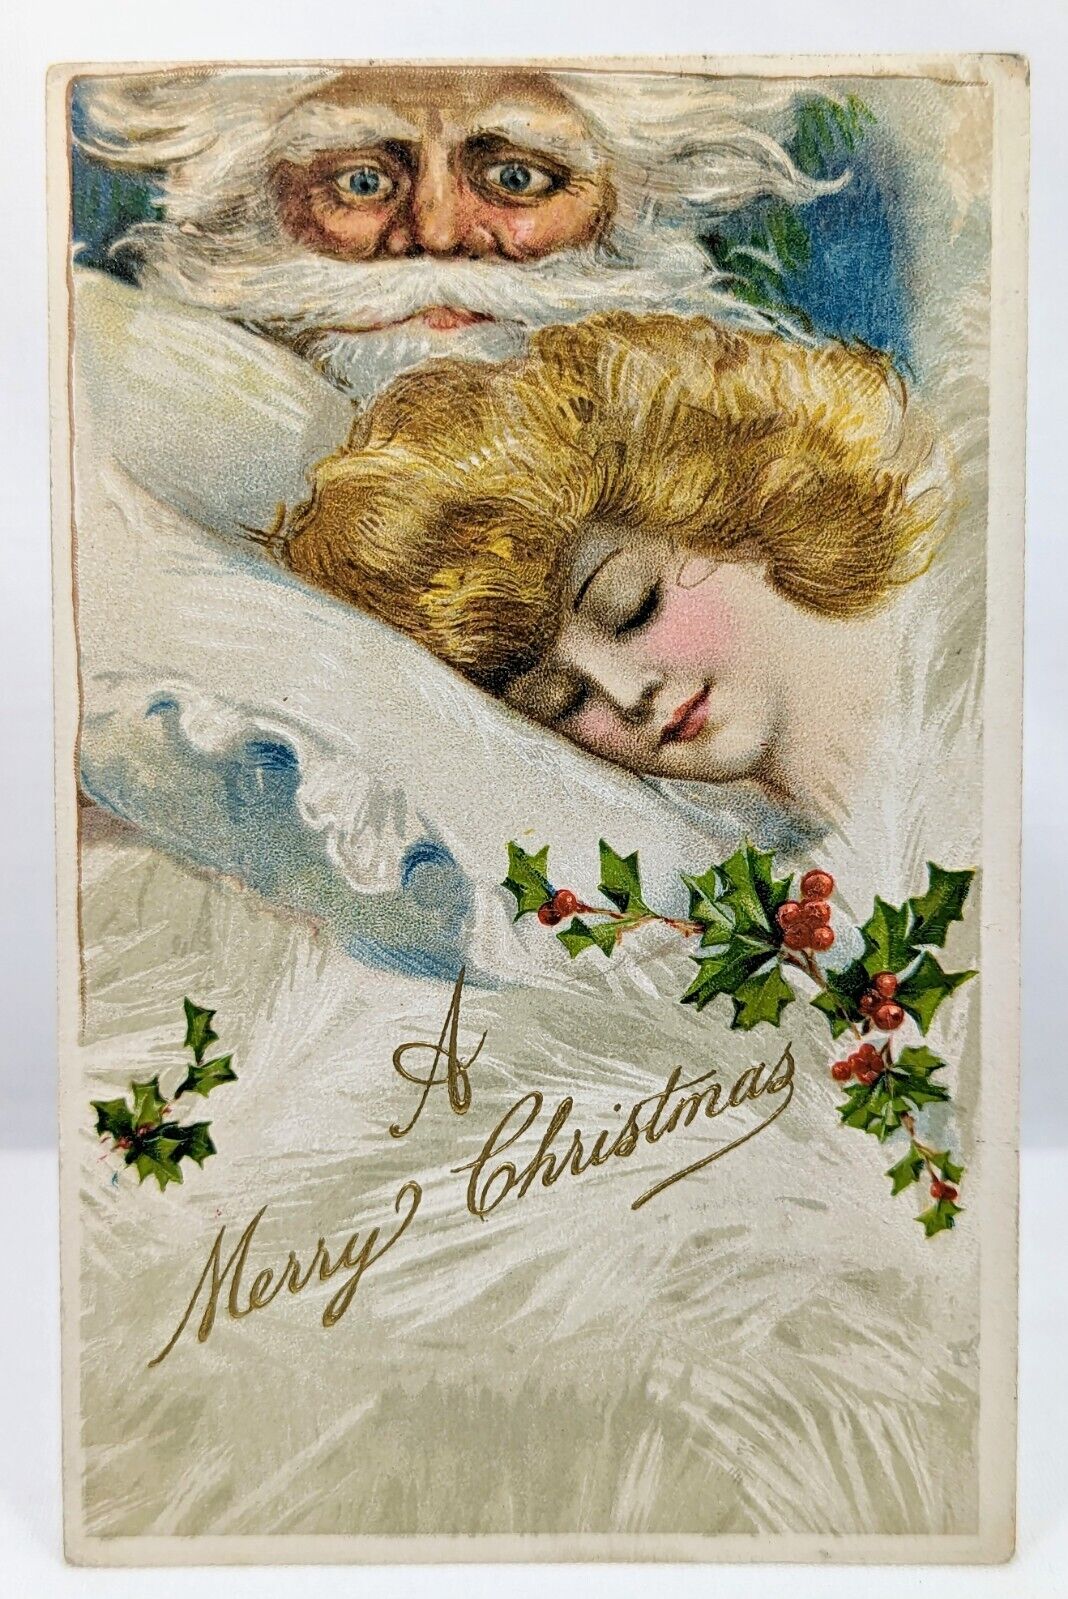 Artist Schmucker Santa Claus and Sleeping Woman Merry Christmas Antique Postcard